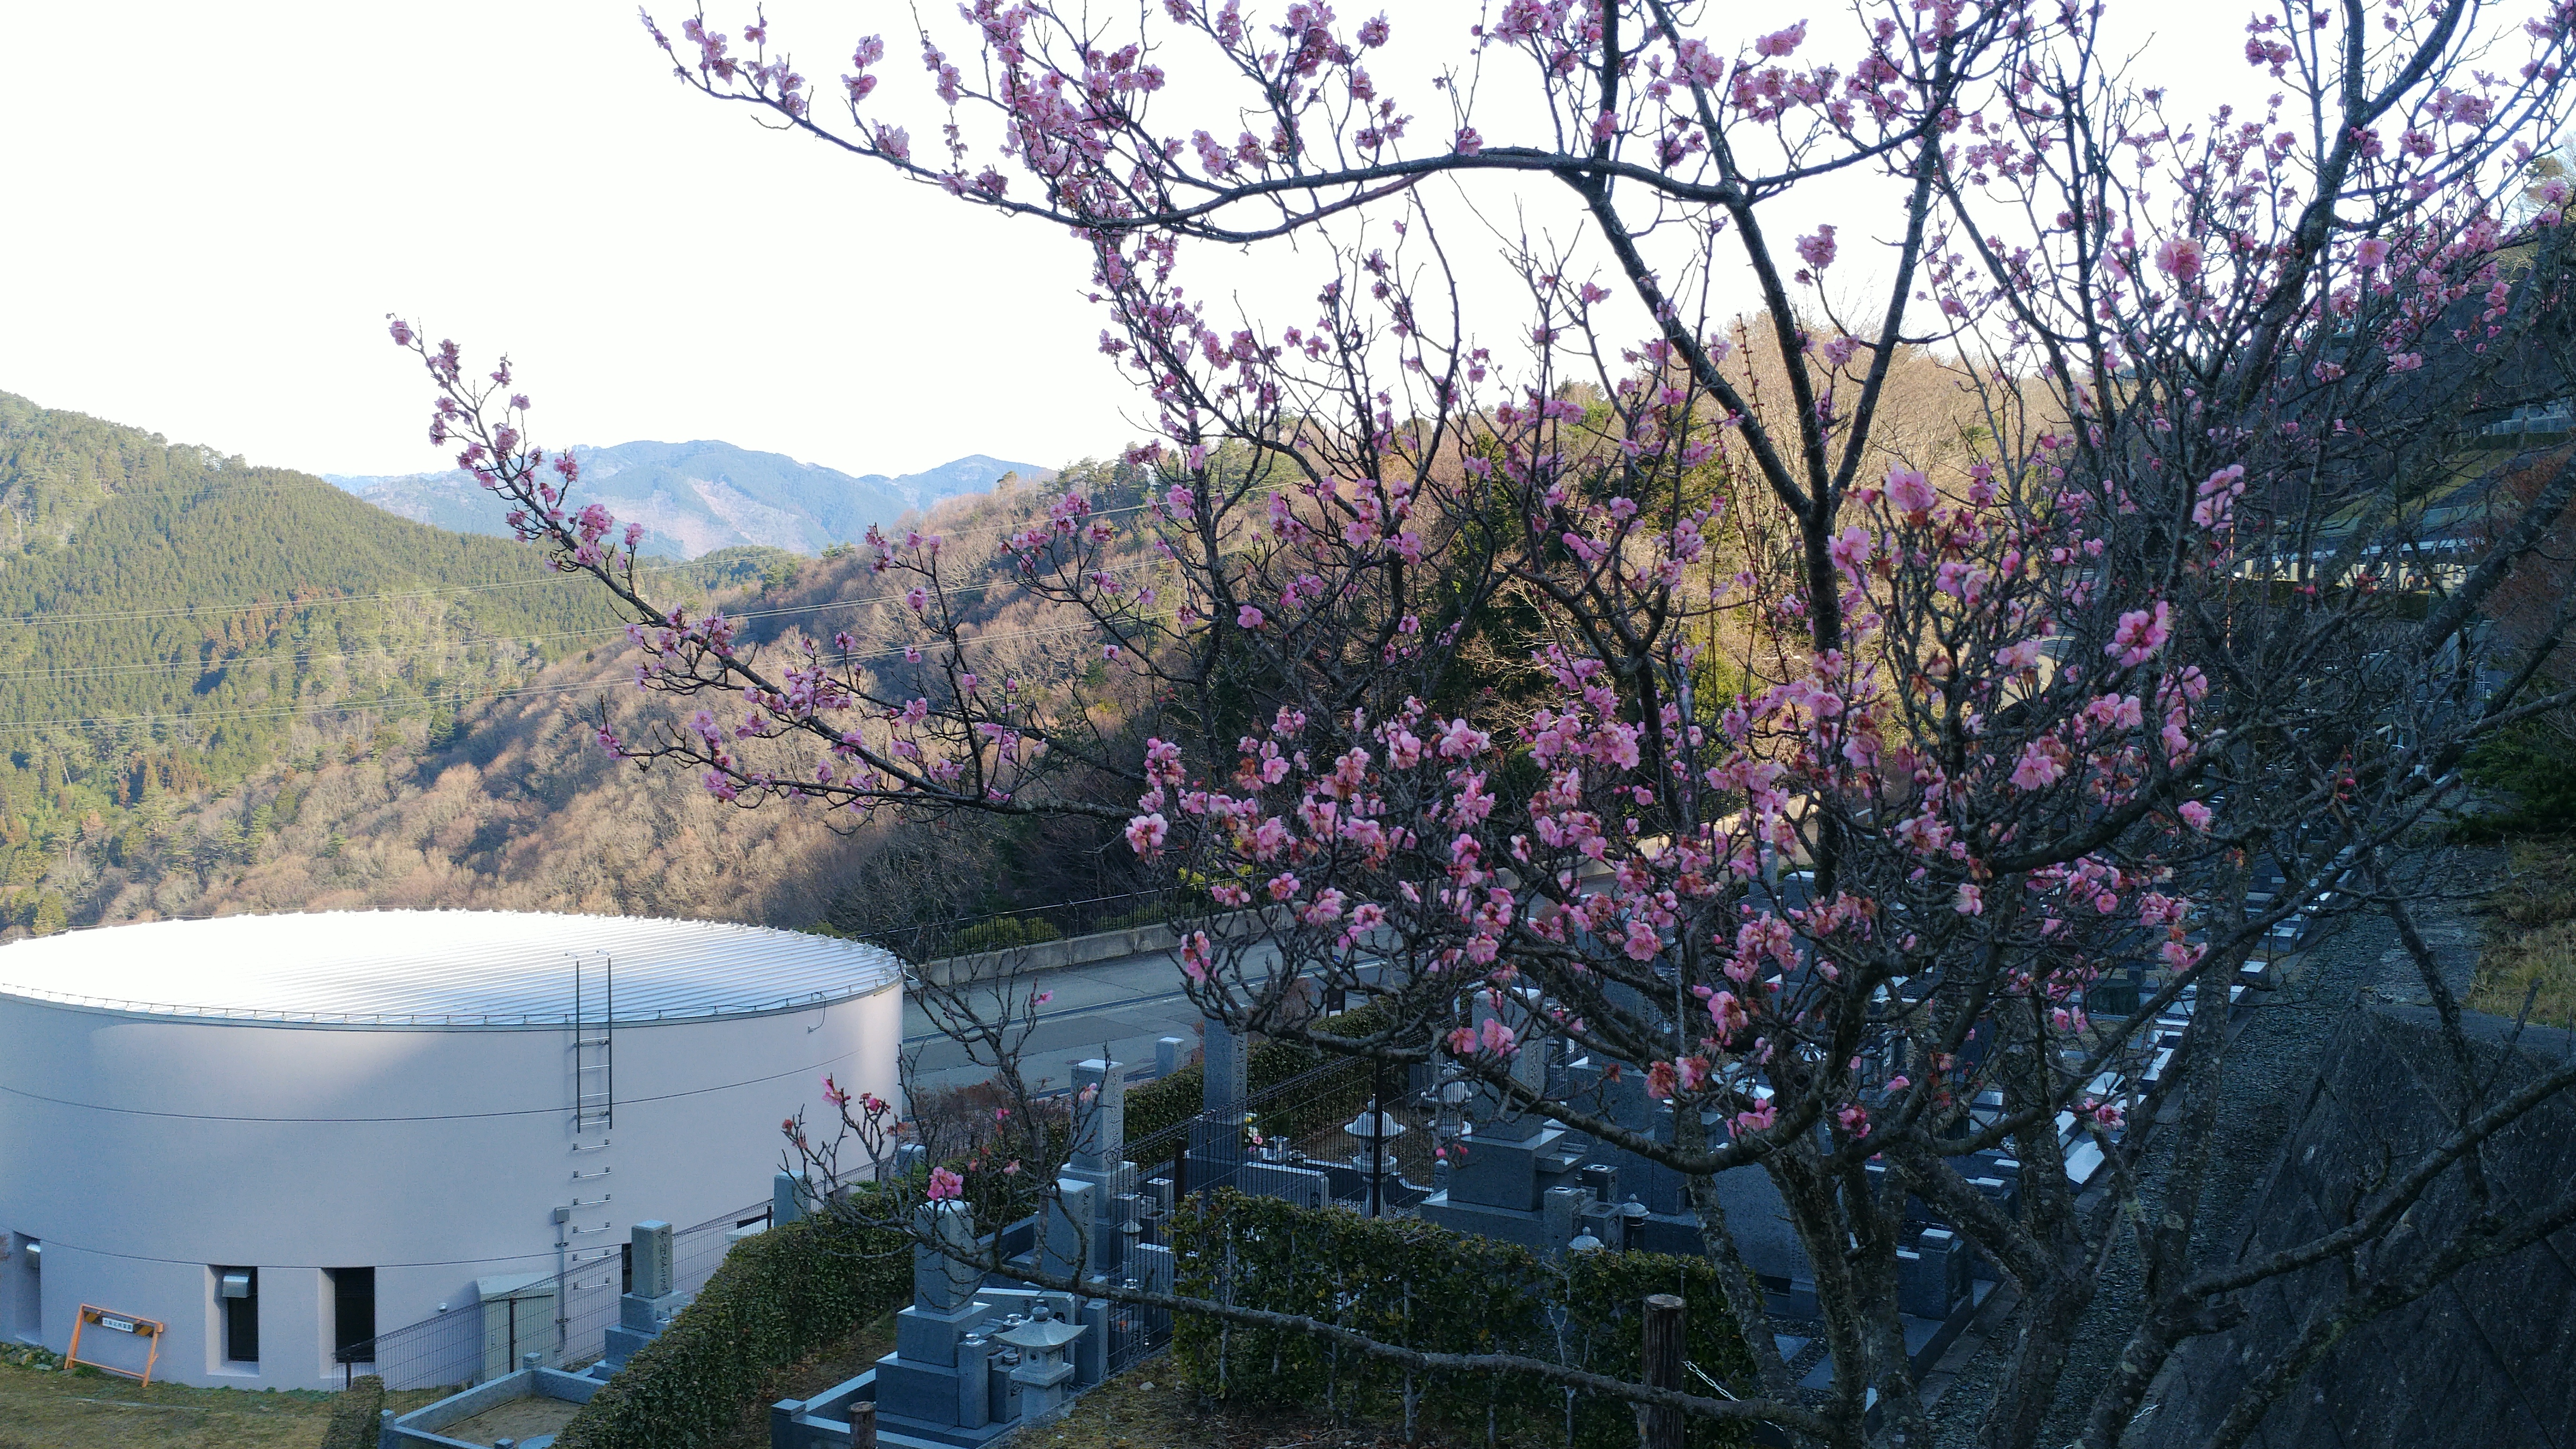 階段墓域・3番枝道「梅の木」風景